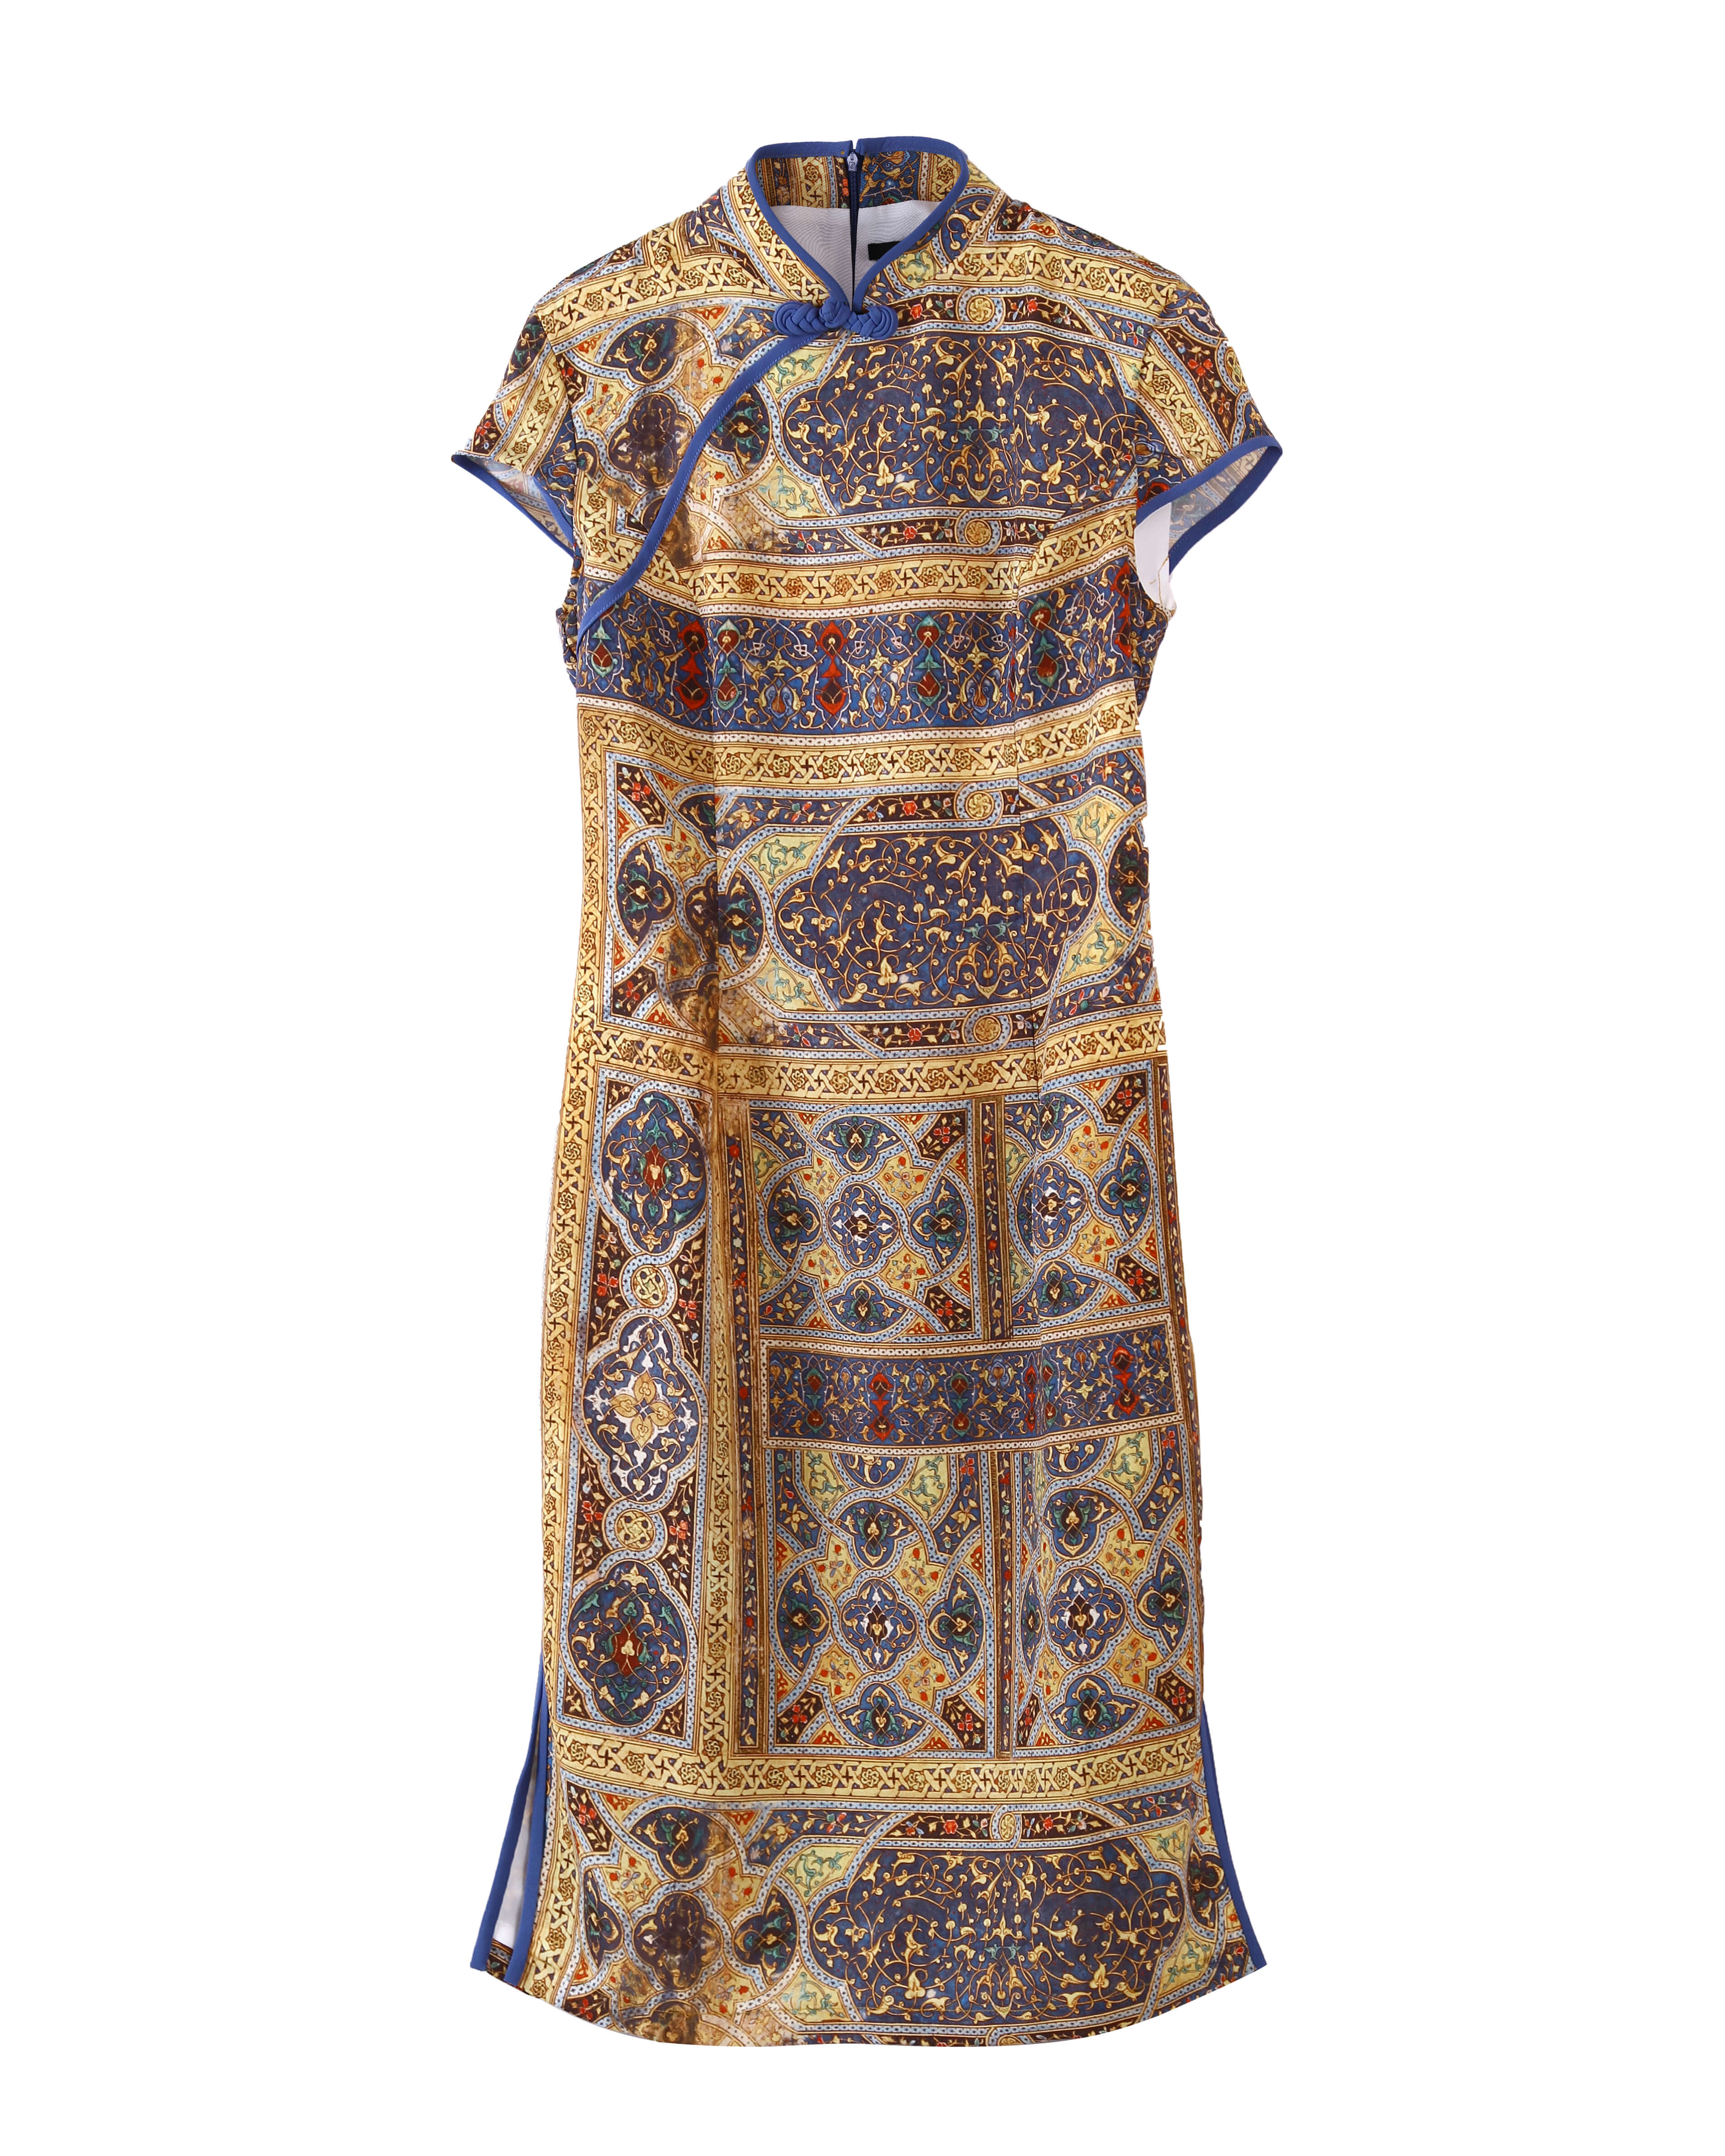 Shahnameh 旗袍 - 12个回收水瓶 - 金色｜AKM Shahnameh Qipao Dress - 12 Recycled Water Bottles - Blue